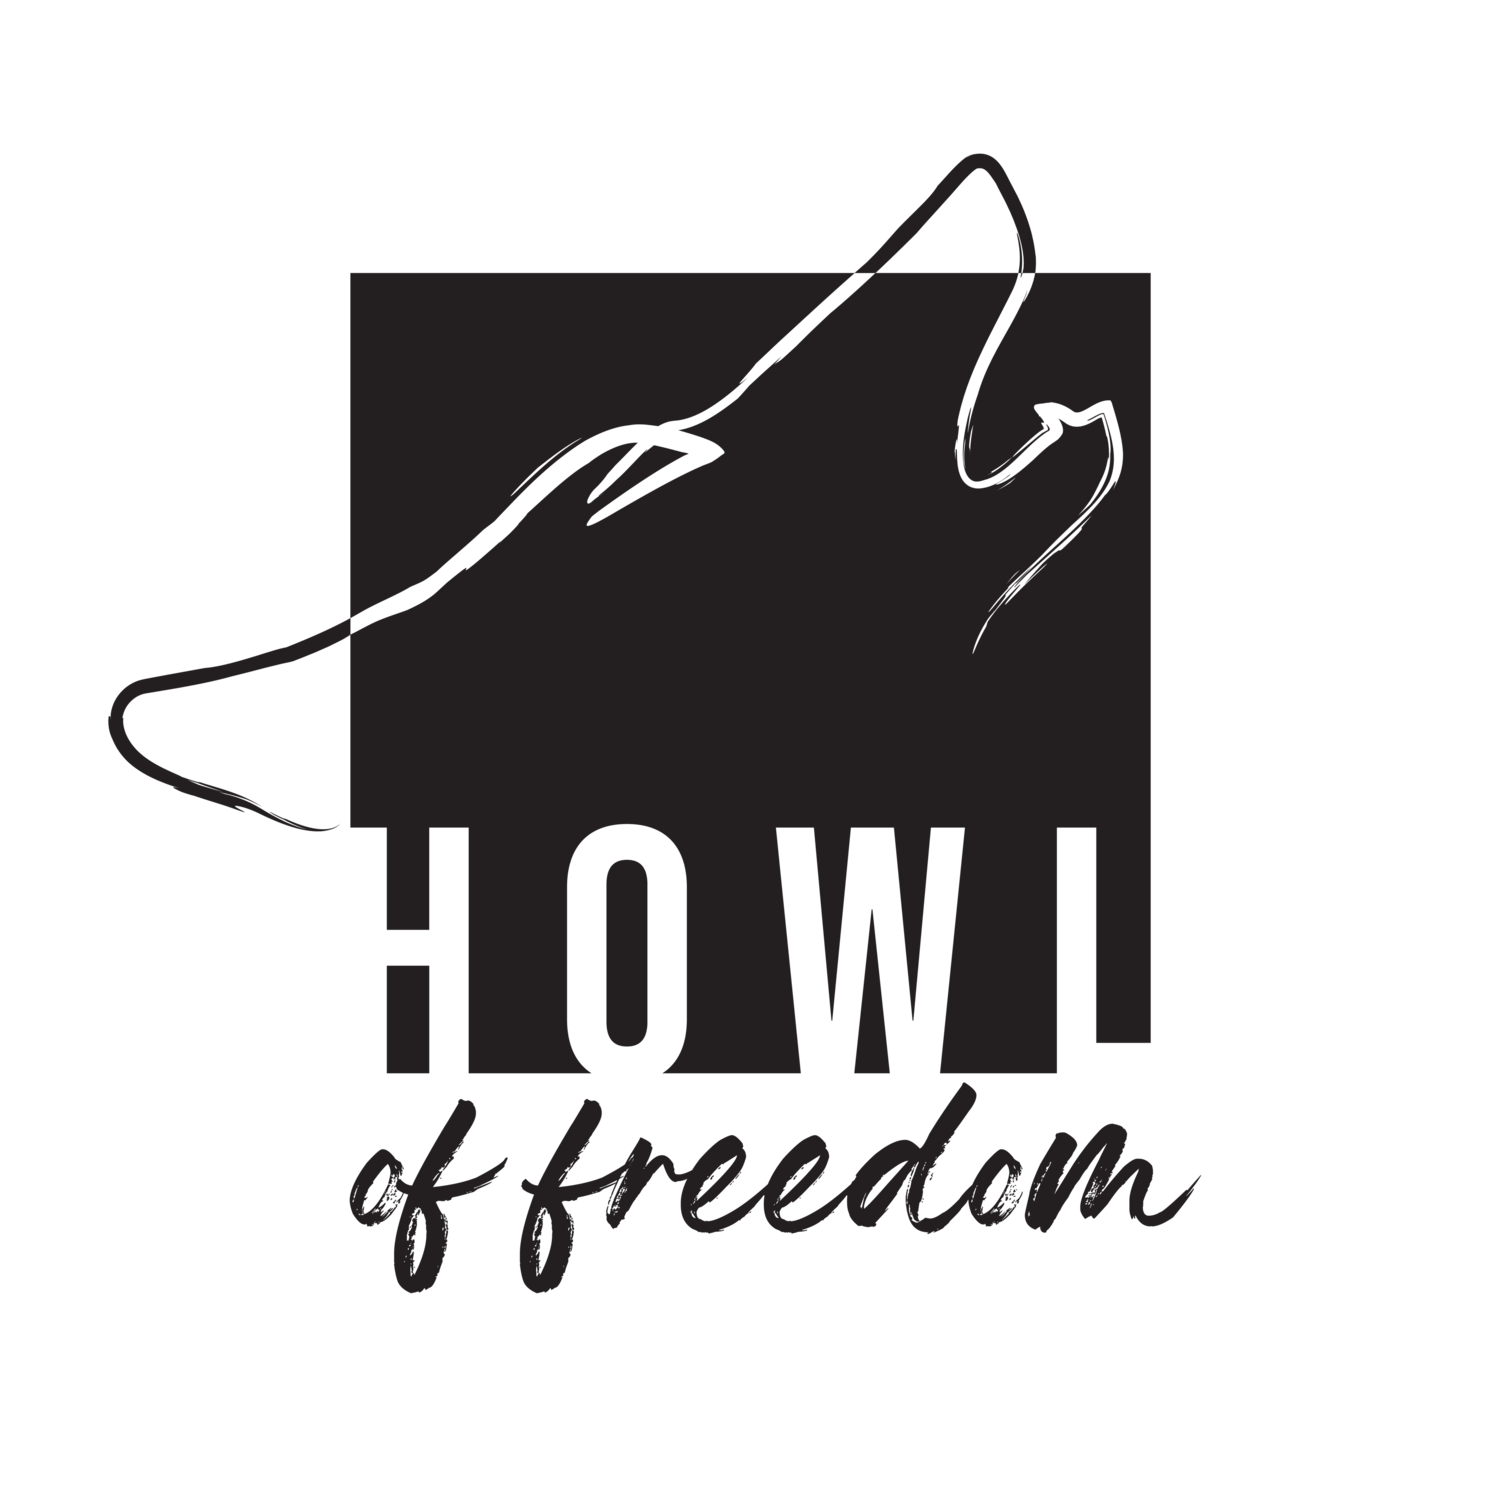 Howl of Freedom